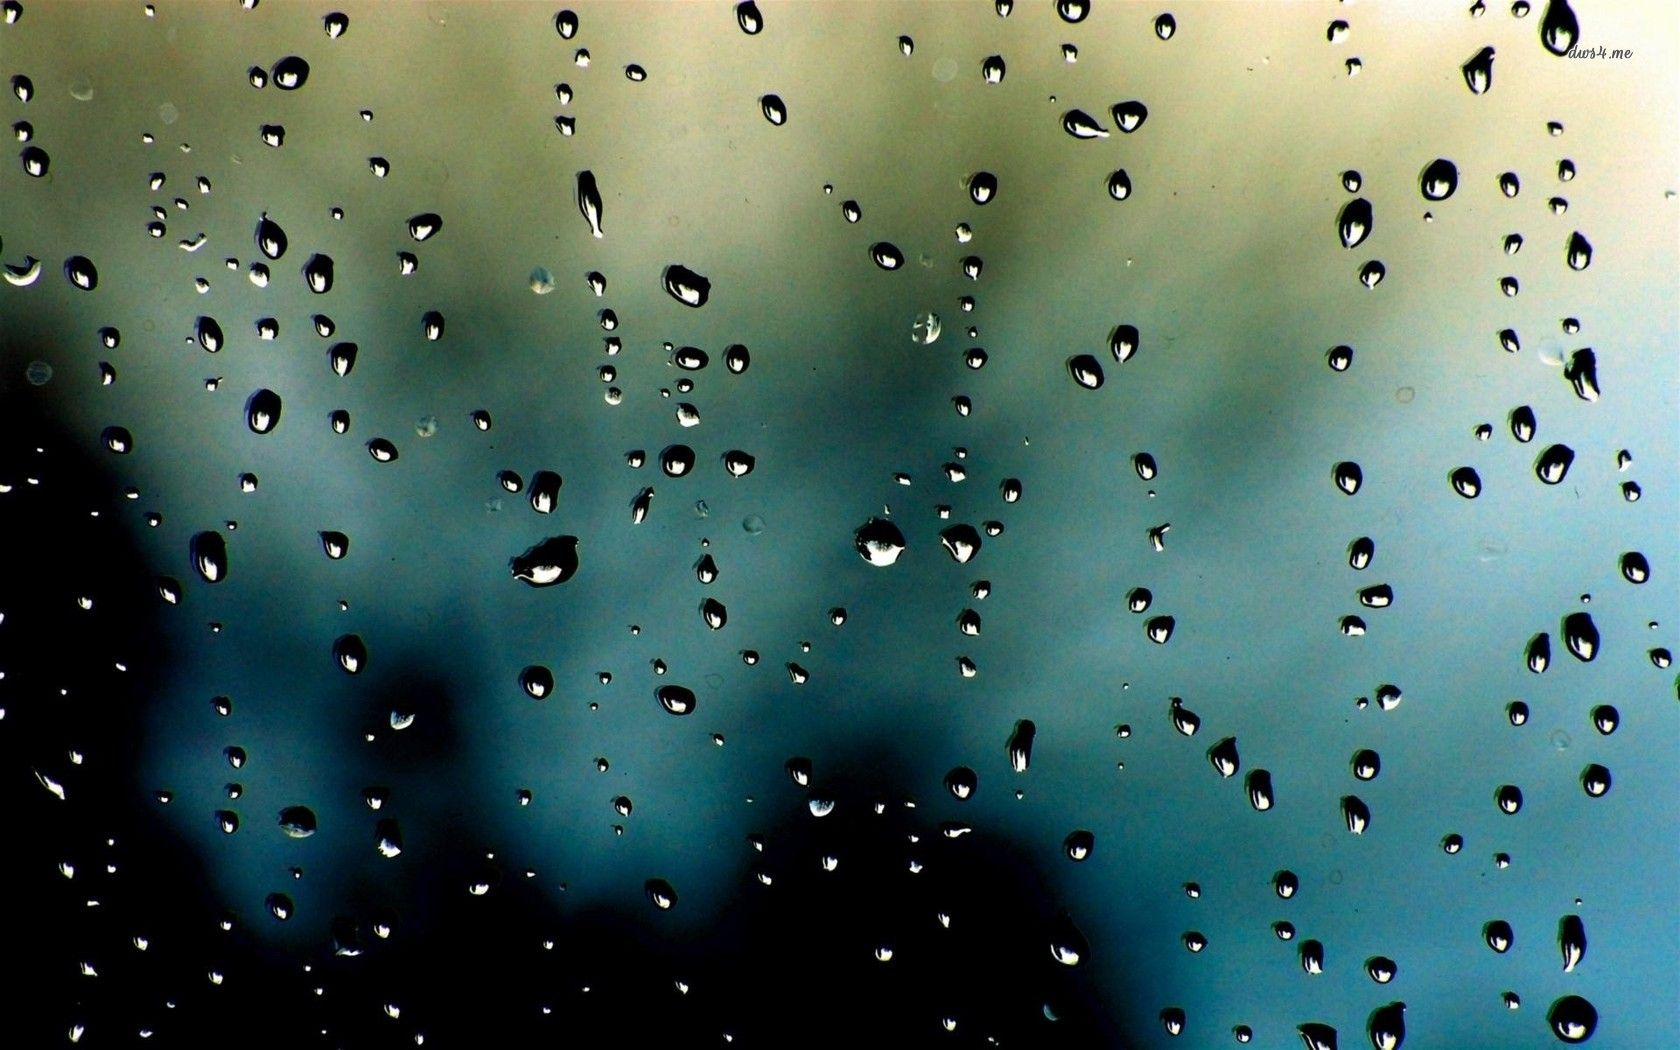 lluvia cae fondos de pantalla en vivo hd,azul,agua,verde,soltar,llovizna